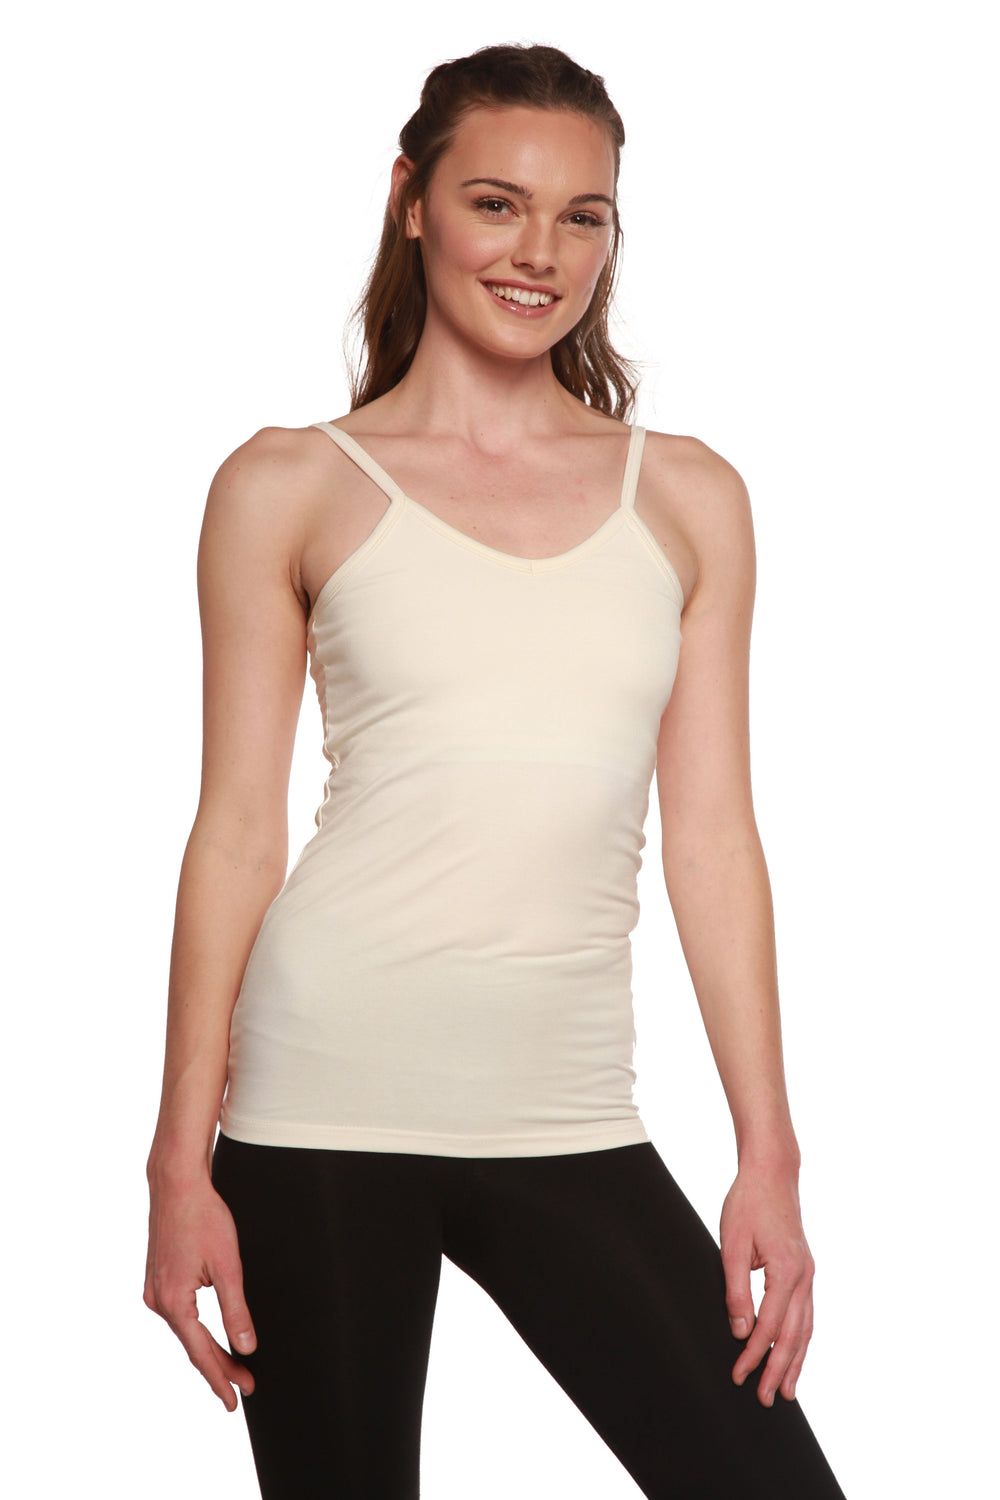 Spdoo Women's Cotton Camisole Shelf Bra Spaghetti Straps Tank Top